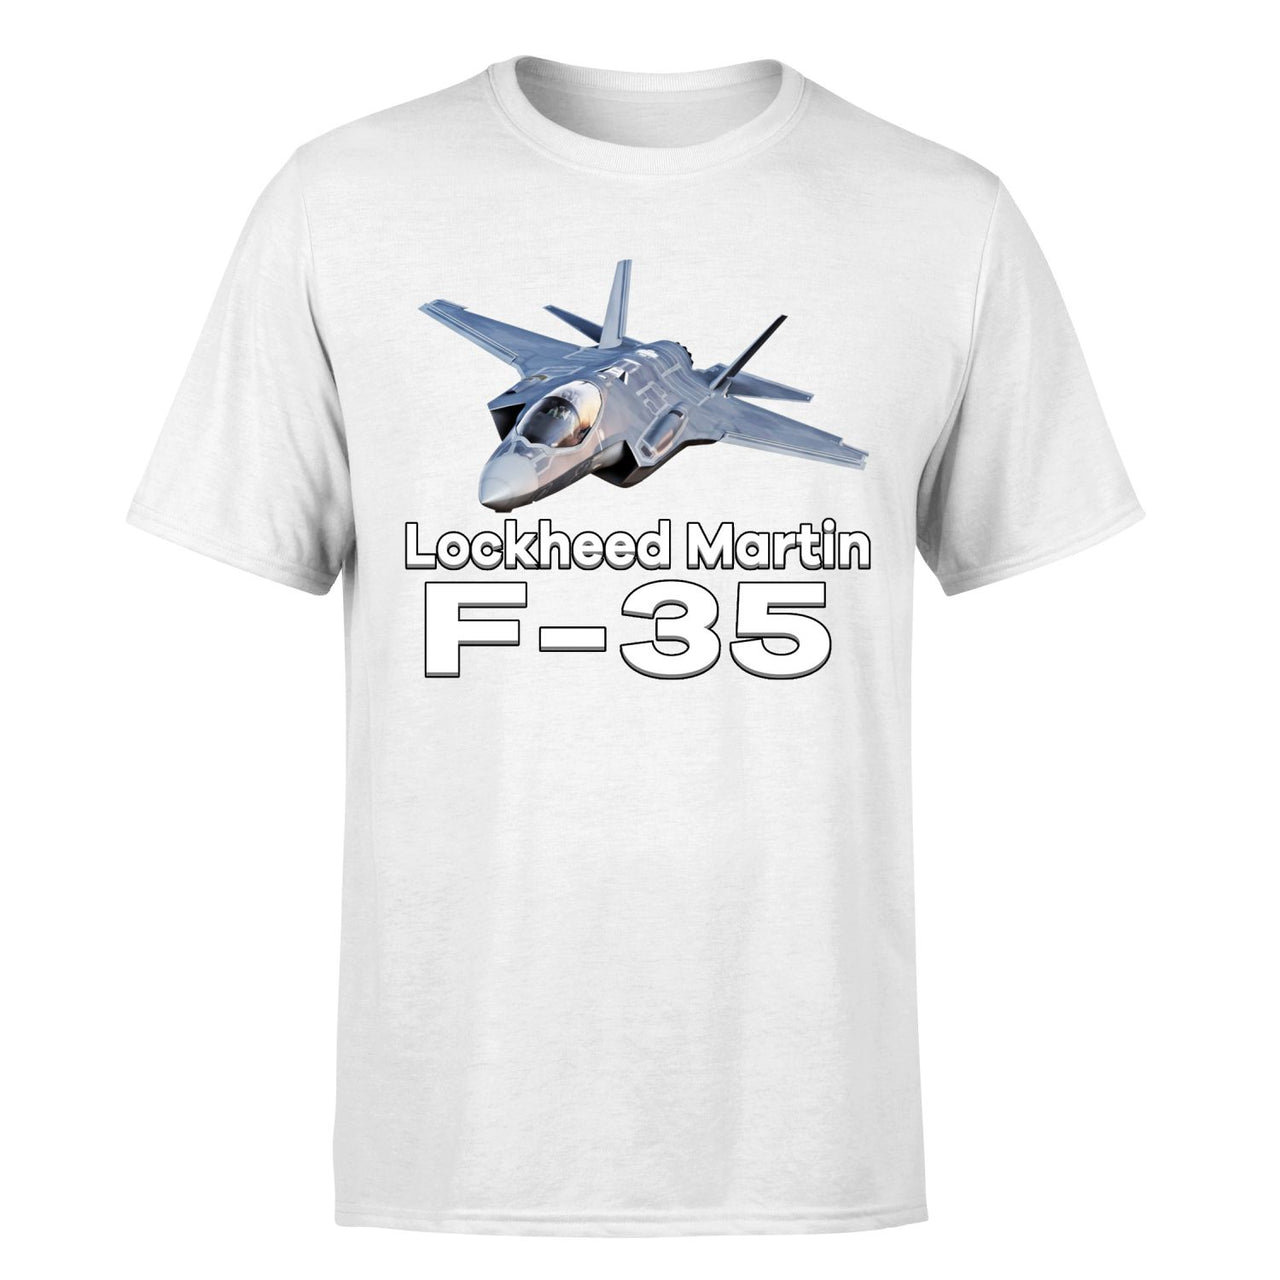 The Lockheed Martin F35 Designed T-Shirts